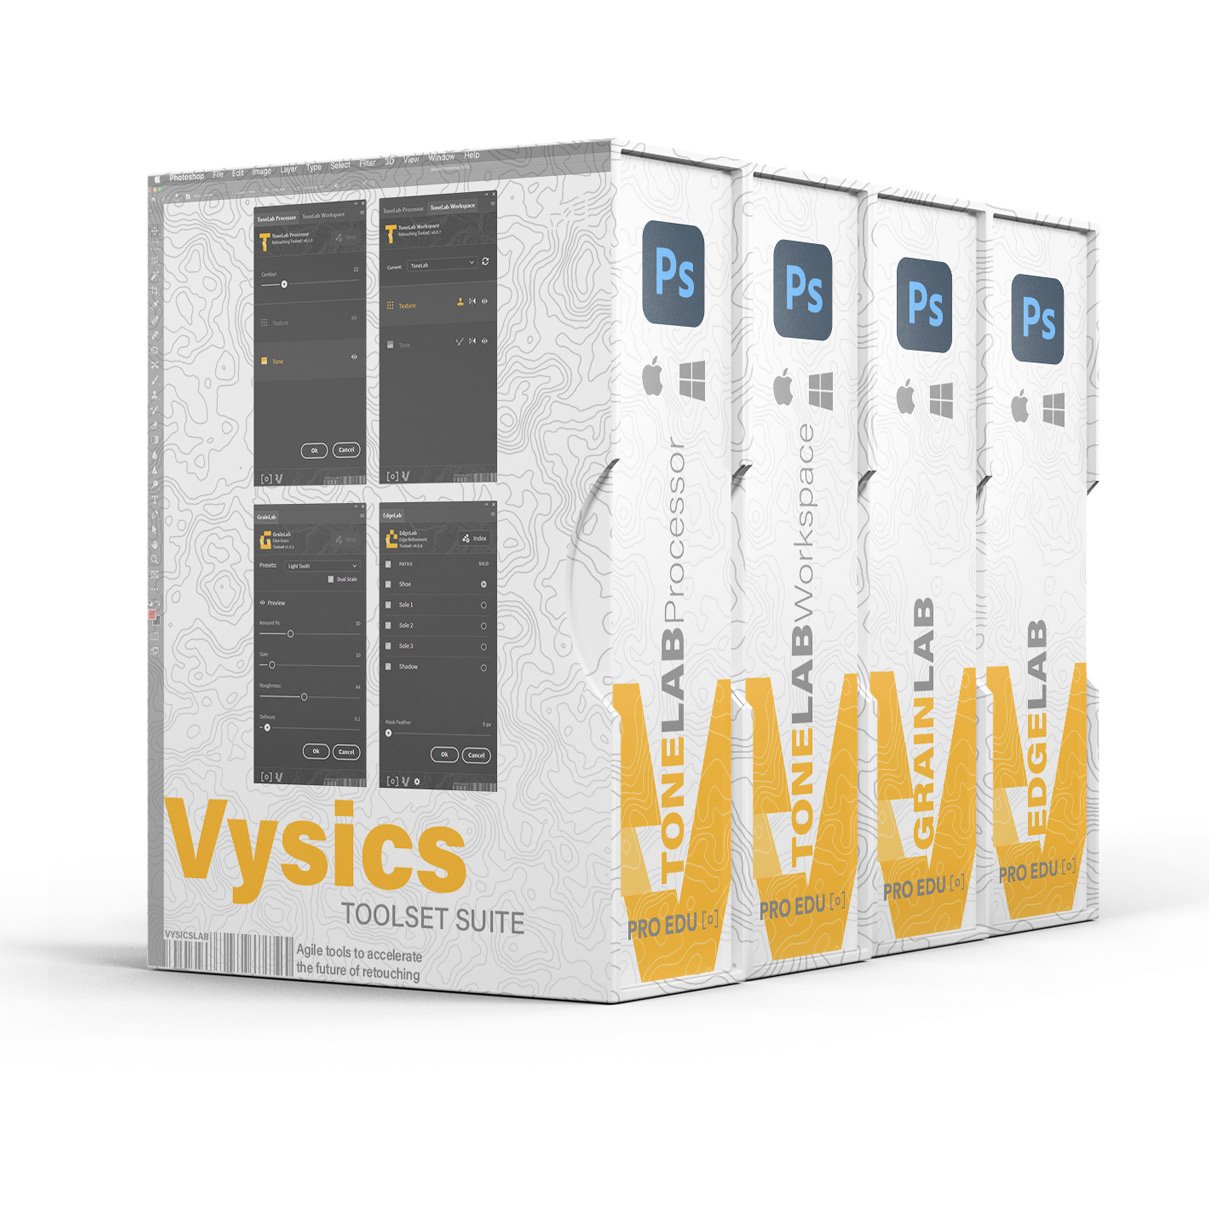 Vysics™ Photoshop Plugin | ToneLab EdgeLab GrainLab Bundle PRO EDU PRO EDU